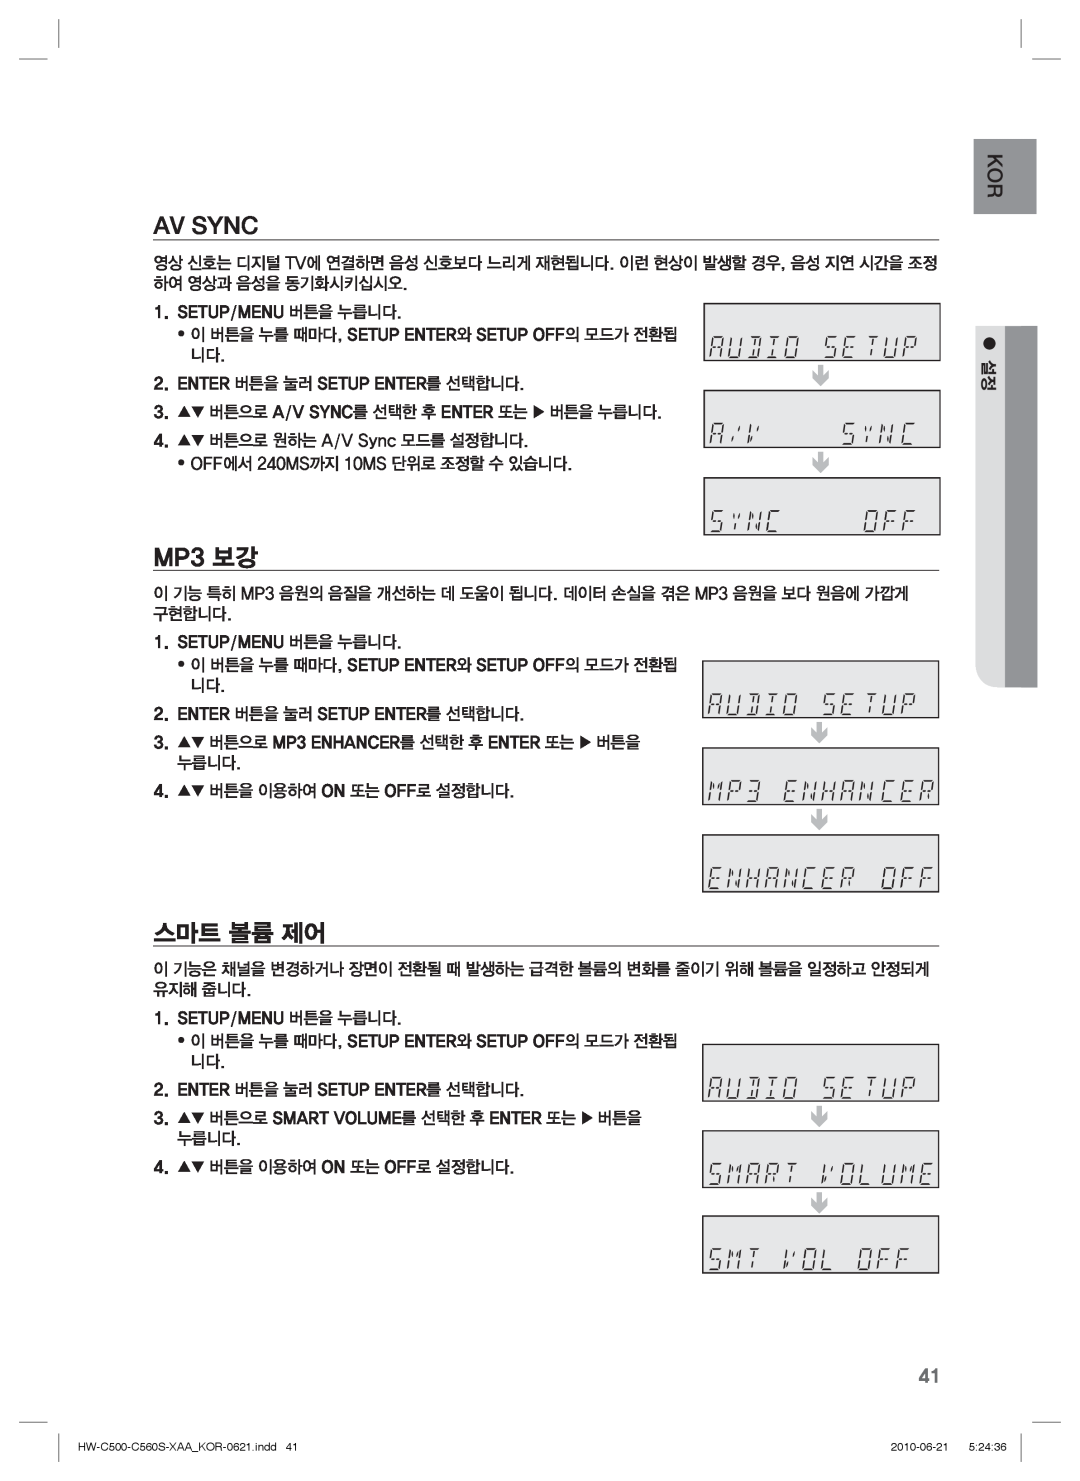 Samsung C560S manual Av Sync, MP3 보강, 스마트 볼륨 제어 